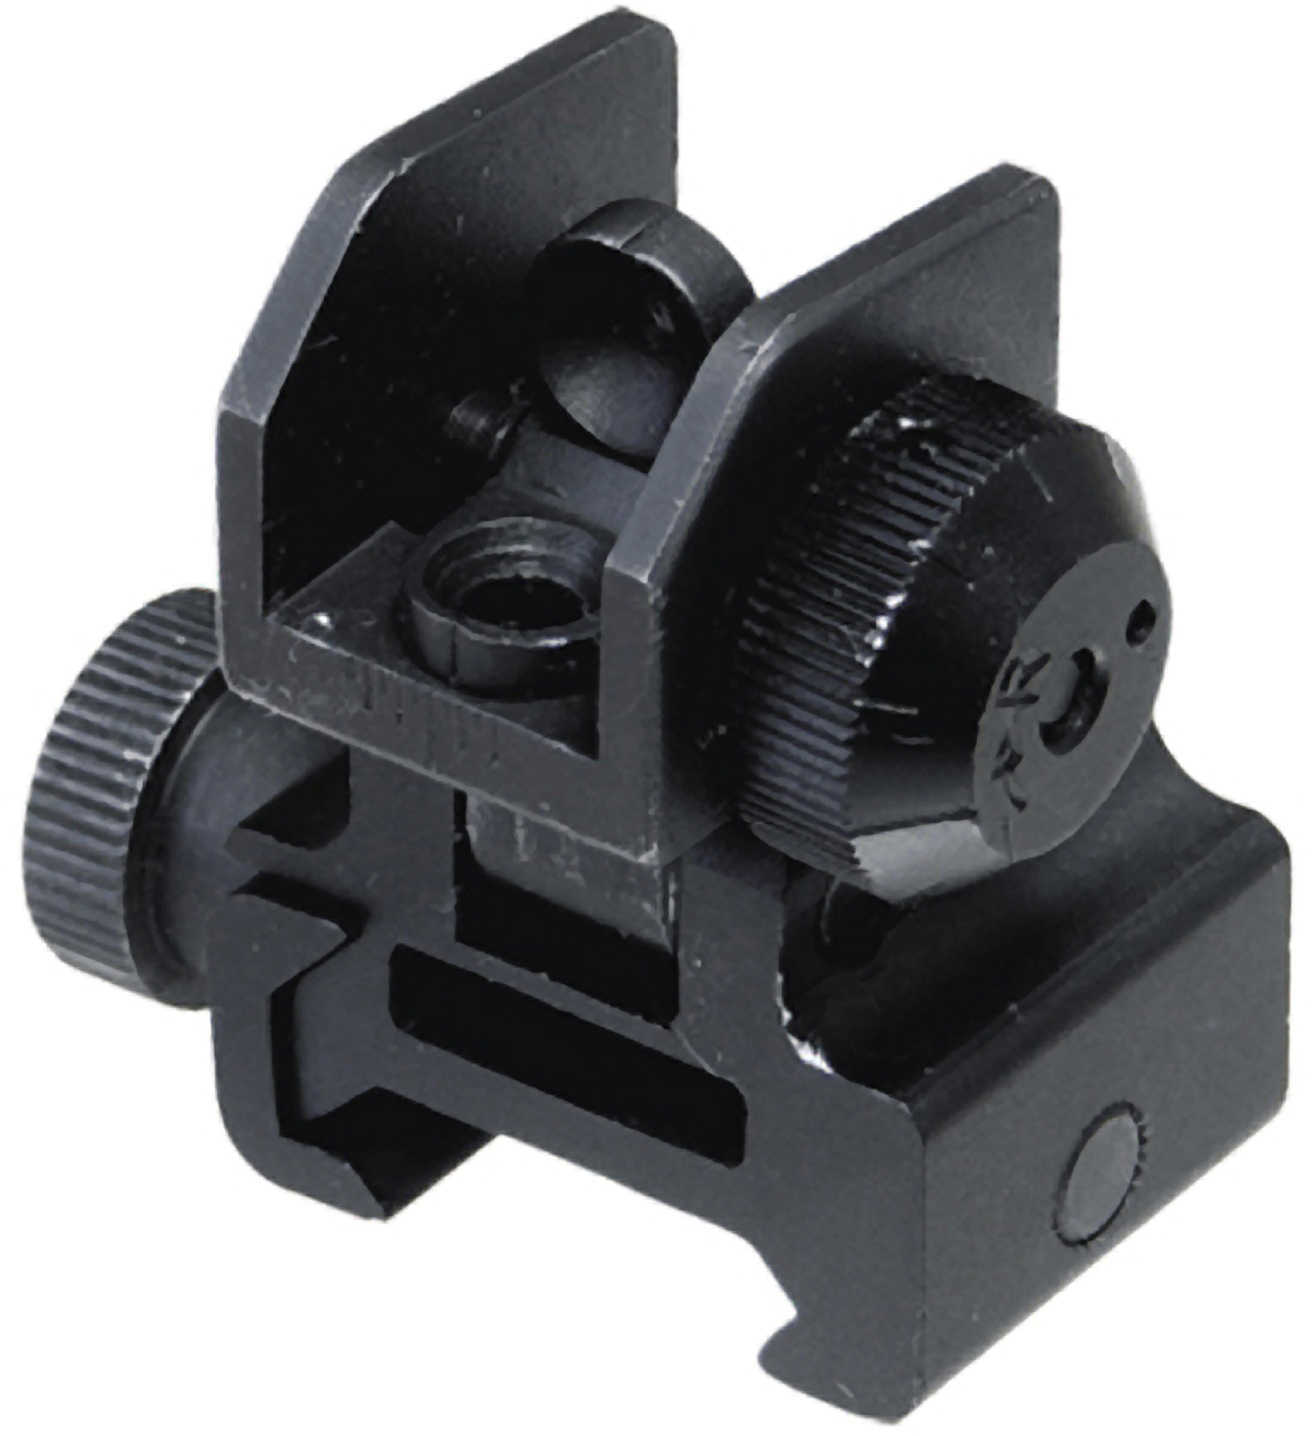 Leapers Inc. - UTG Tactical Sight Rear Full Range Windage and Elevation Adjustment Compact Black Finish MNT-951